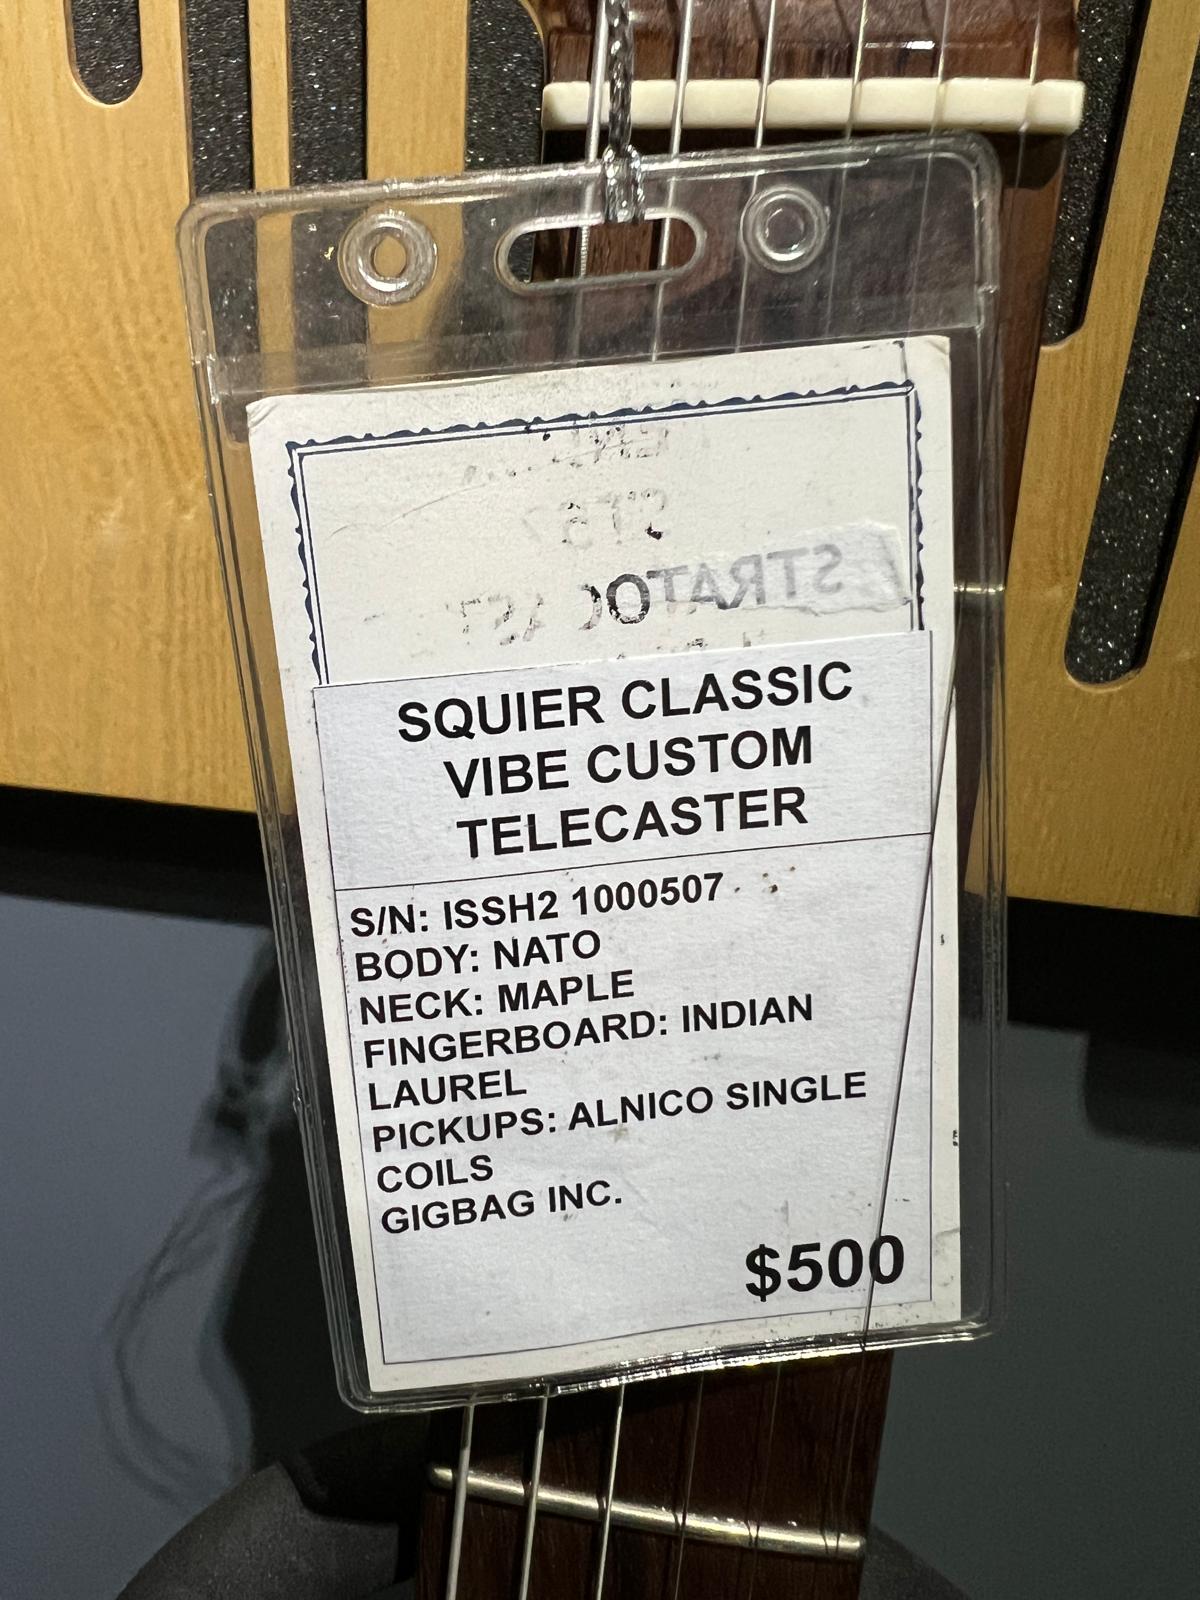 Squier classic vibe custom telecaster (used)